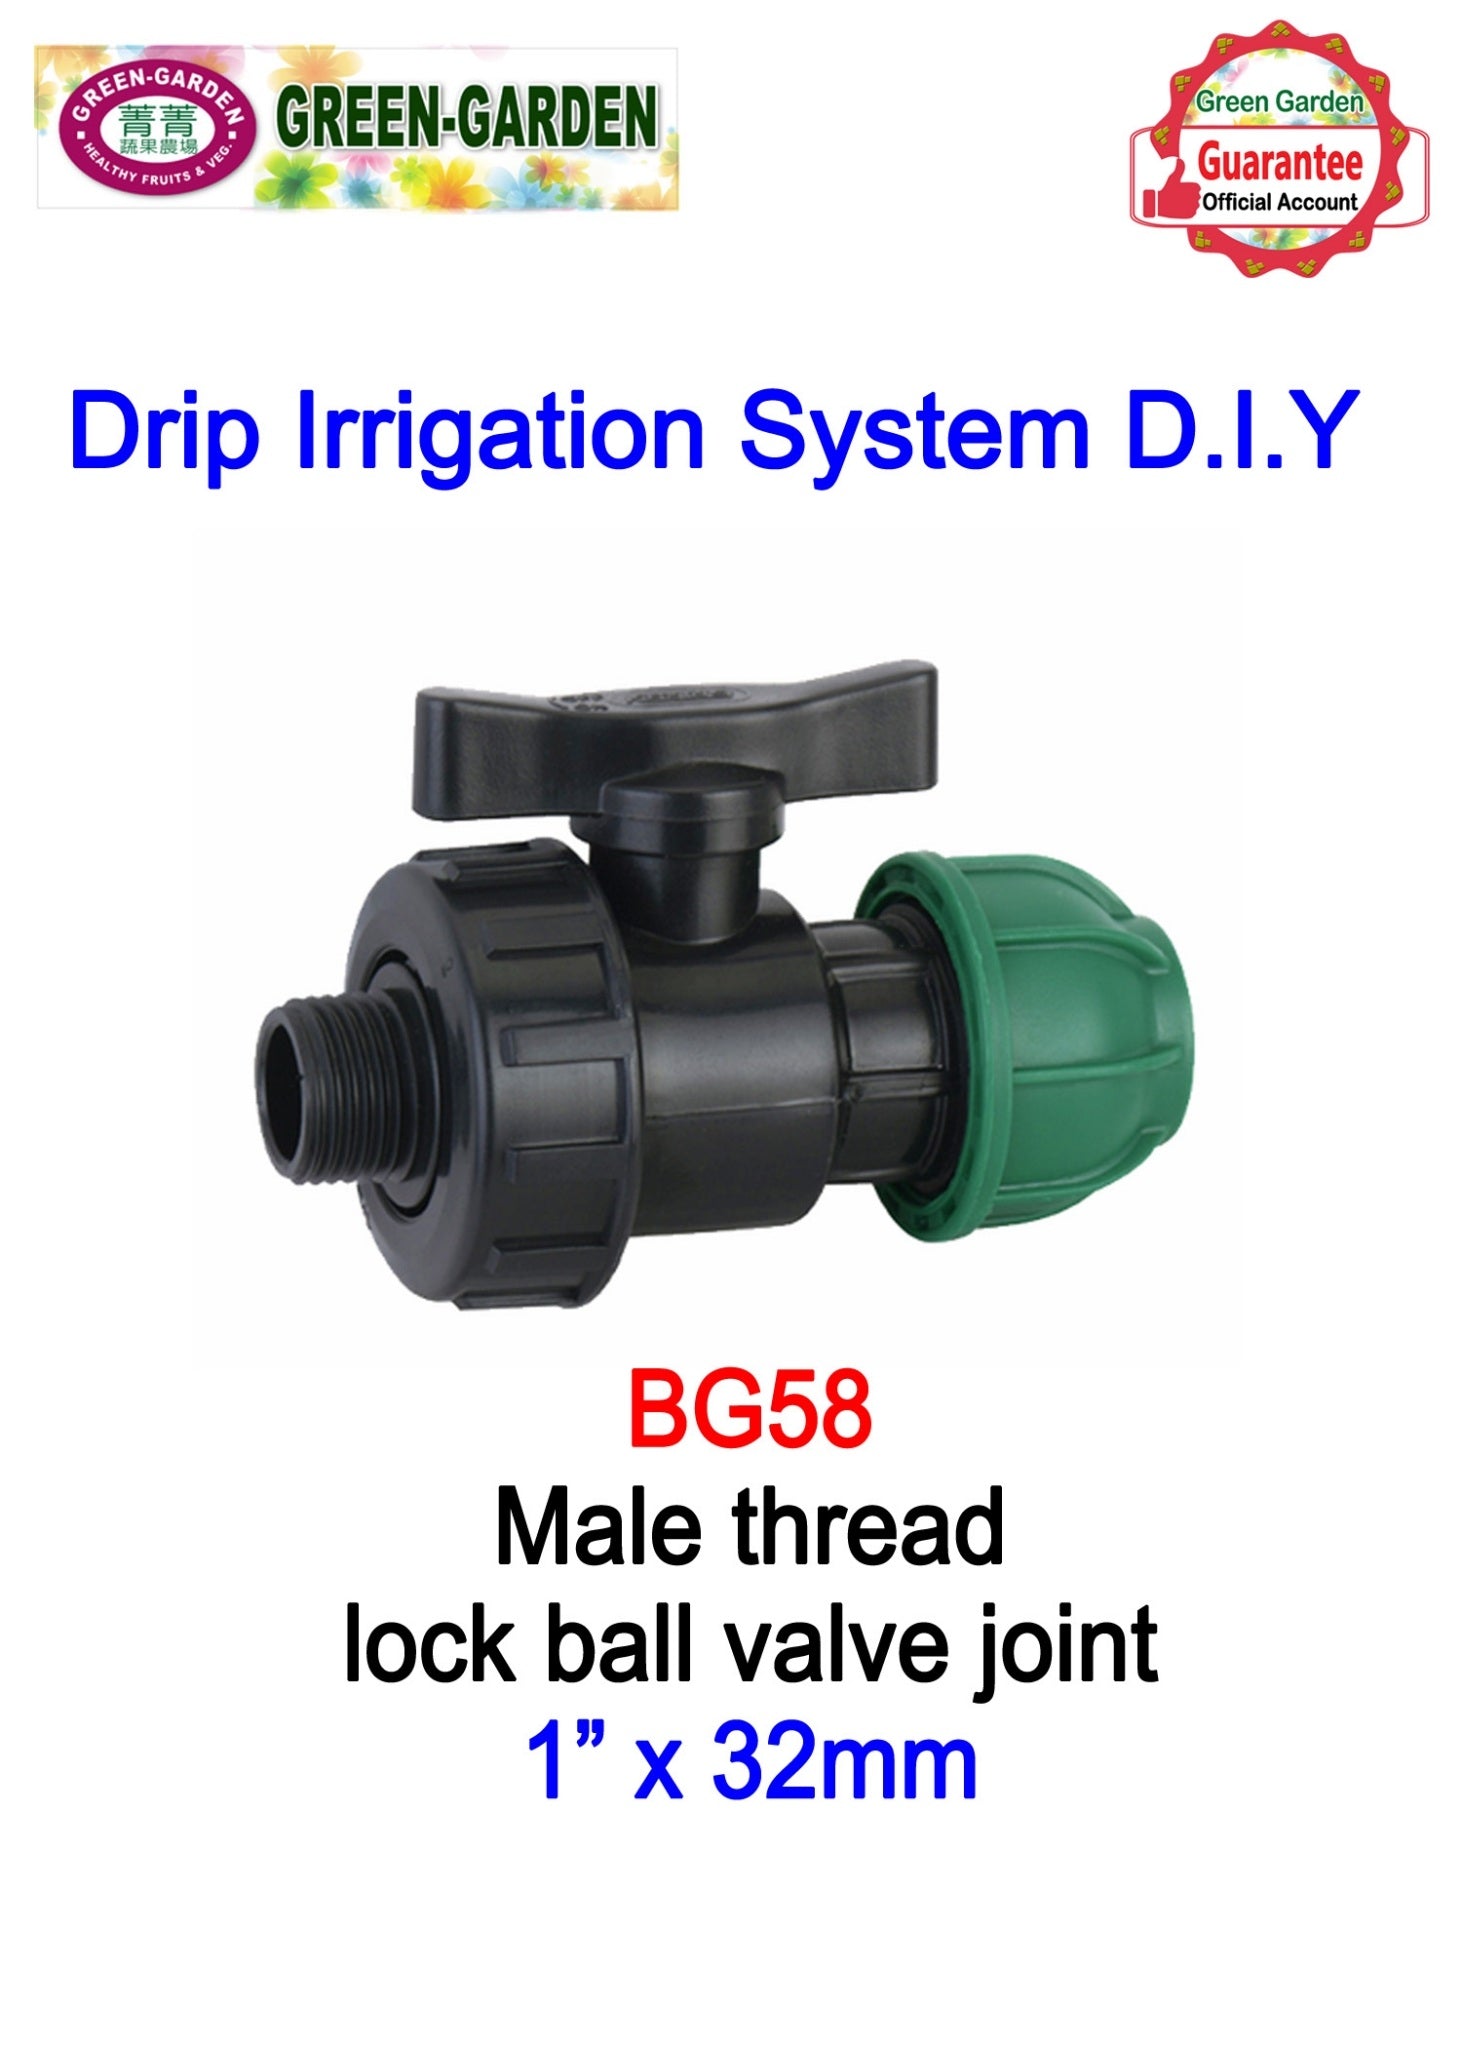 Drip Irrigation System - 1"male thread x32mm lock ball valve joint BG58